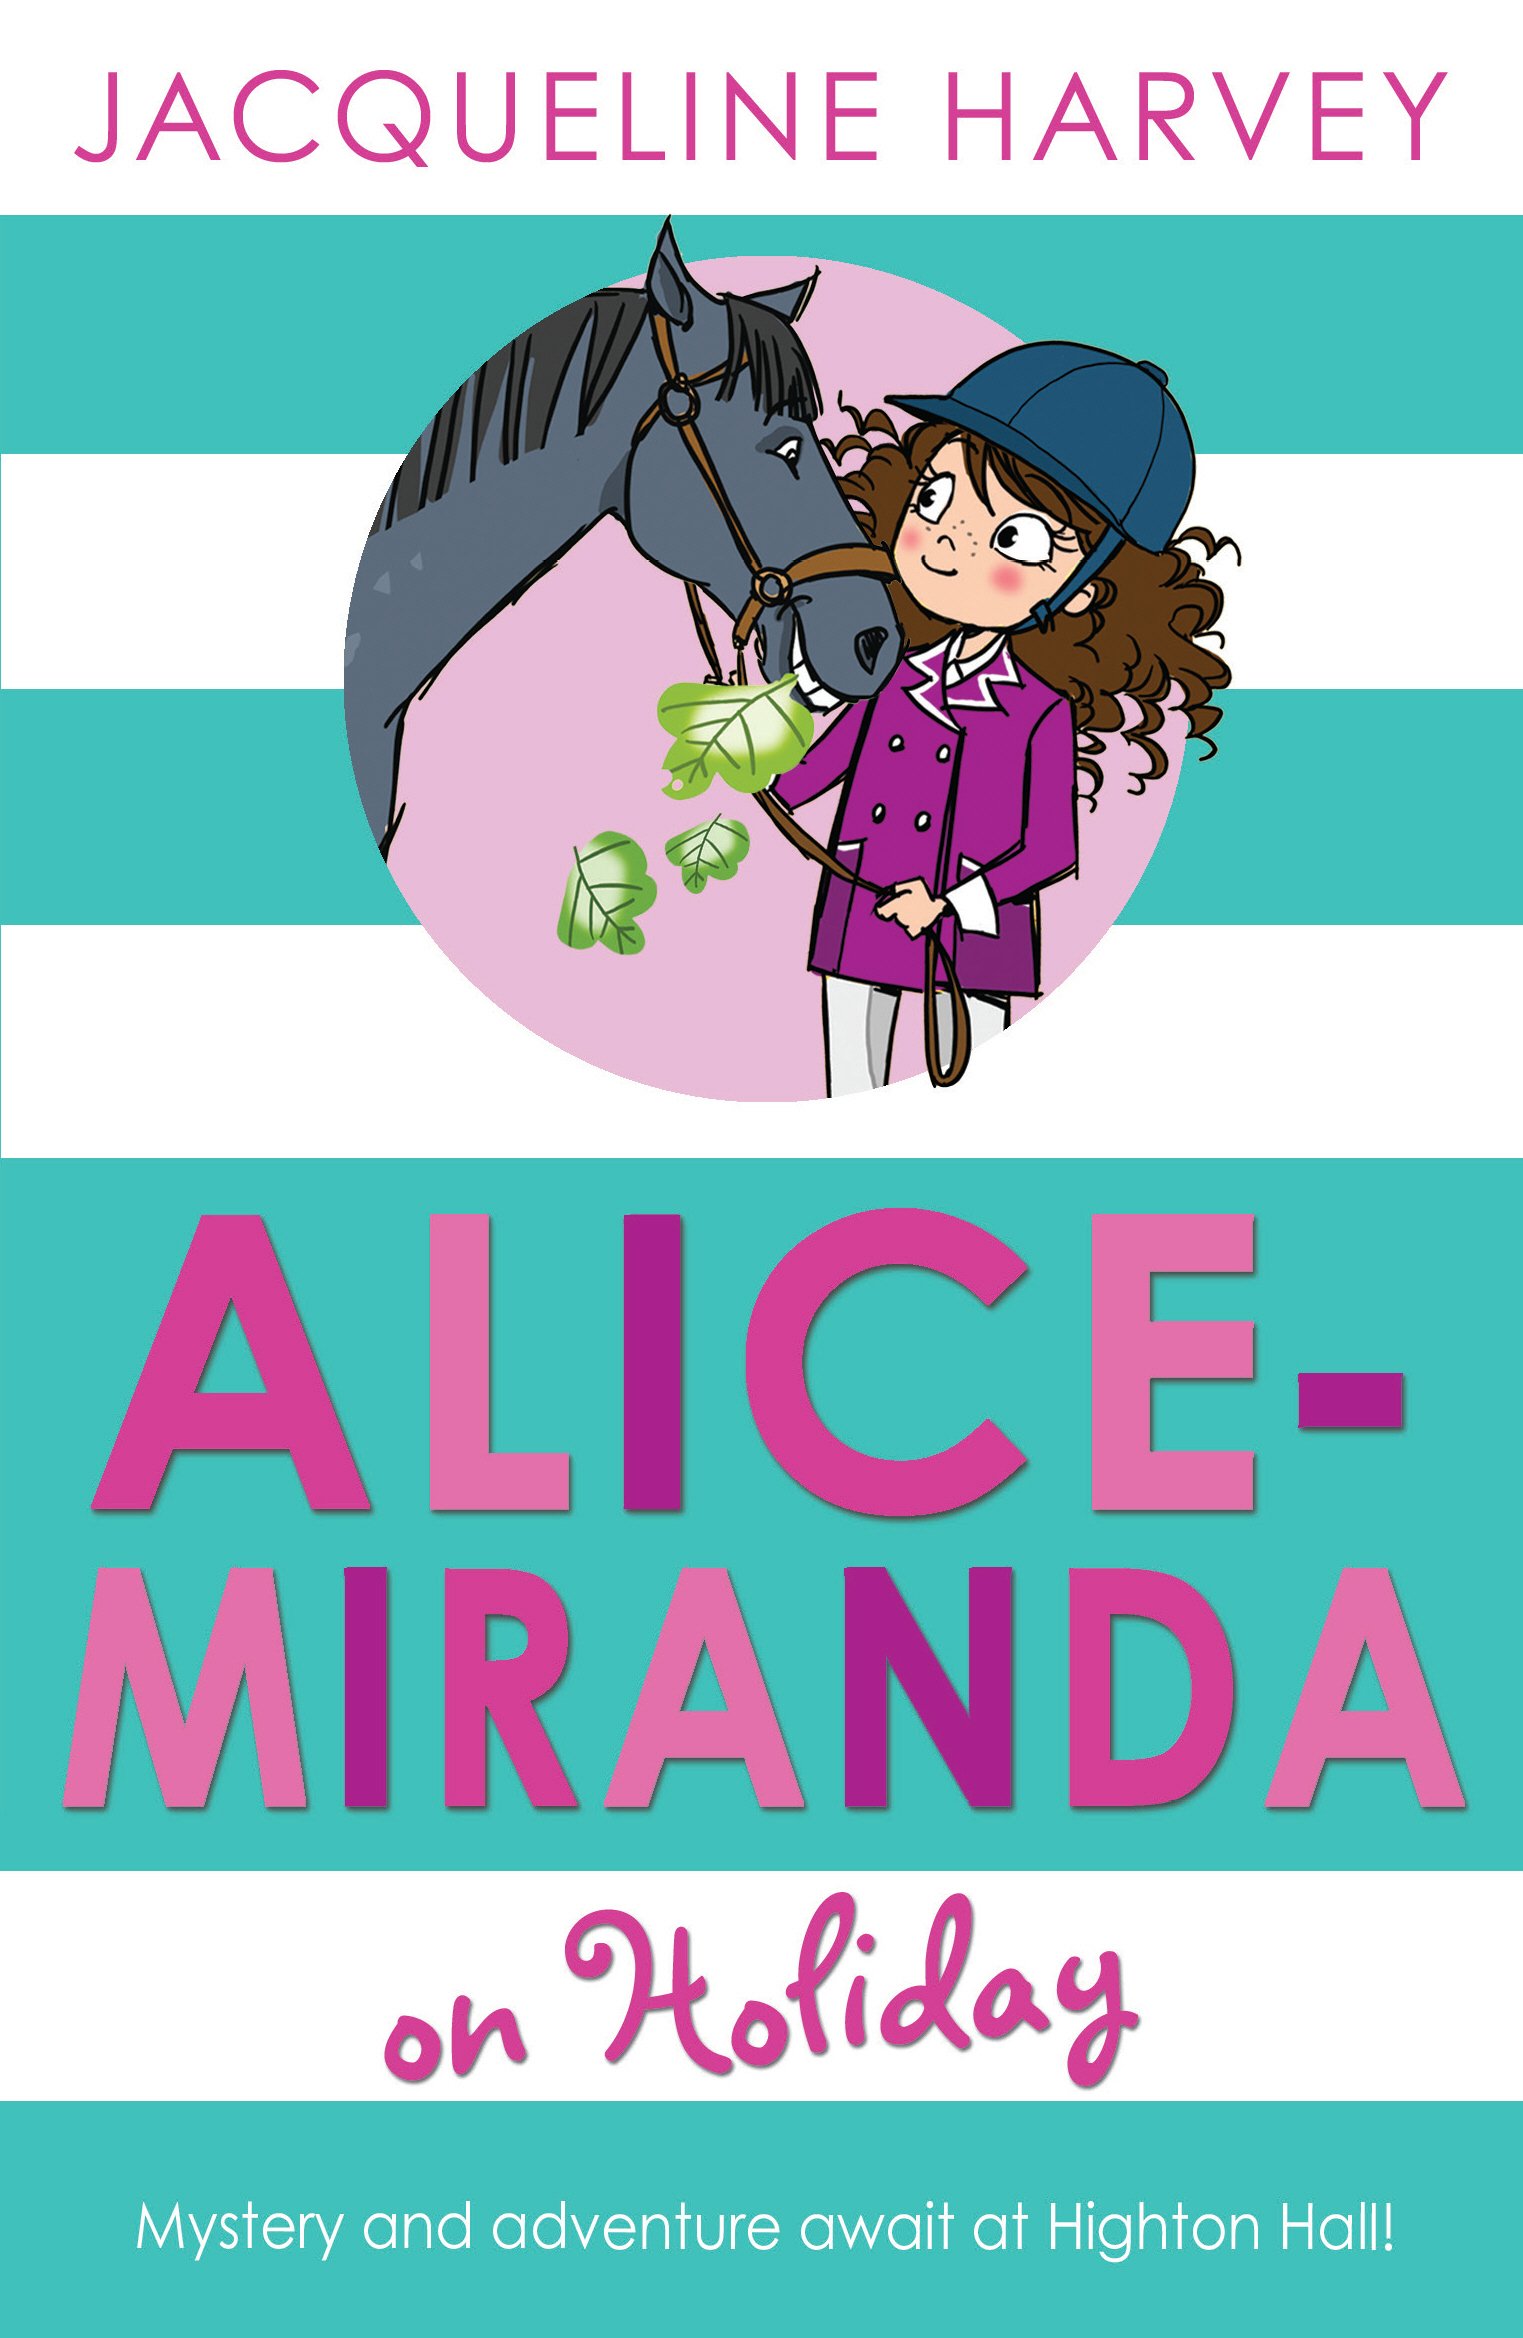 Alice-Miranda on Holiday (#2)- Jacqueline Harvey